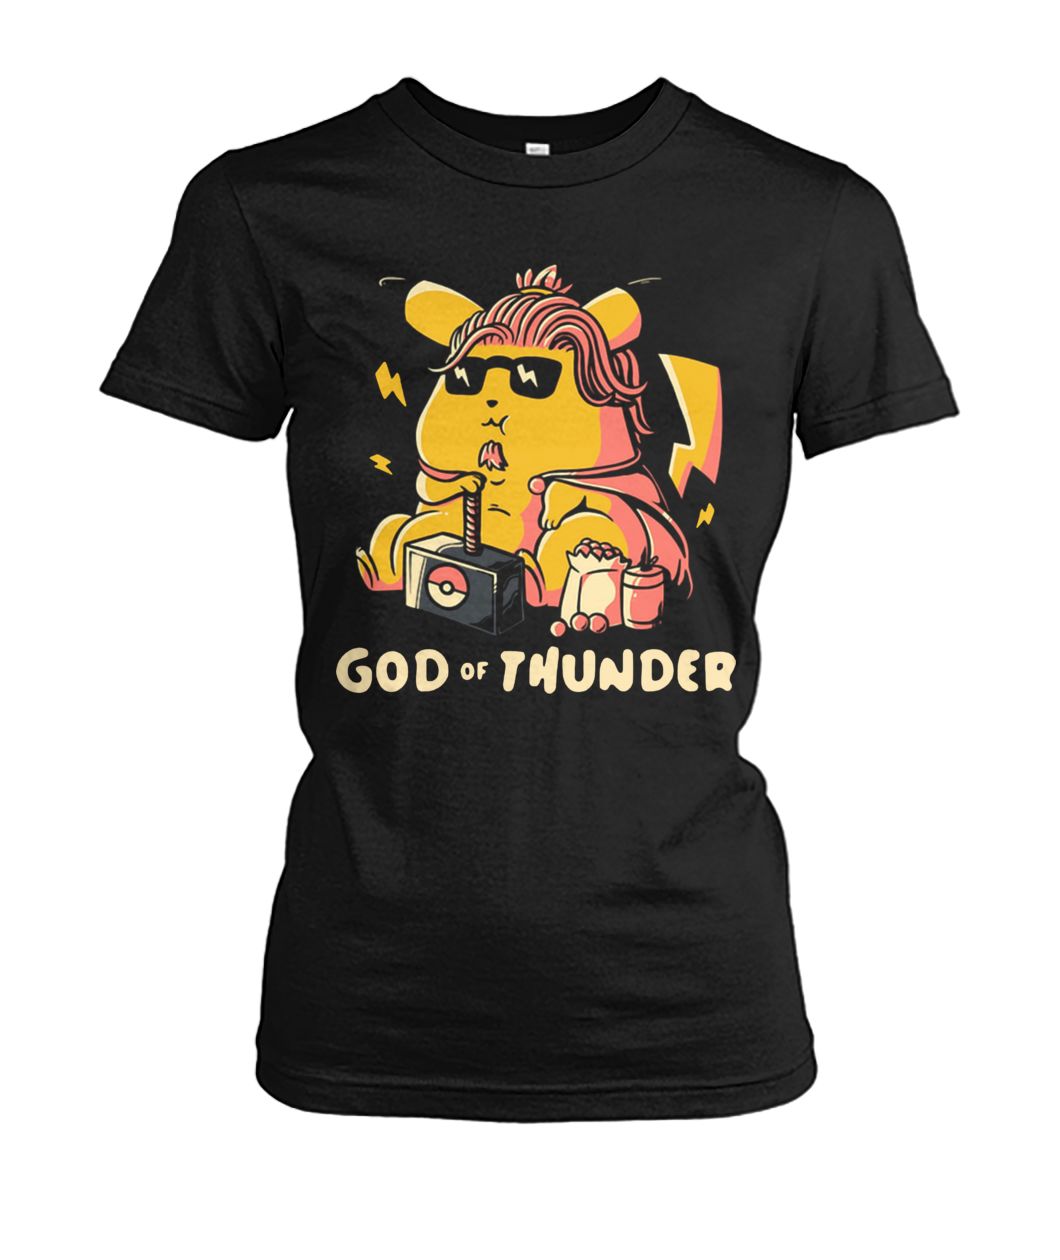 Thor style pikachu the god of thunder women's crew tee